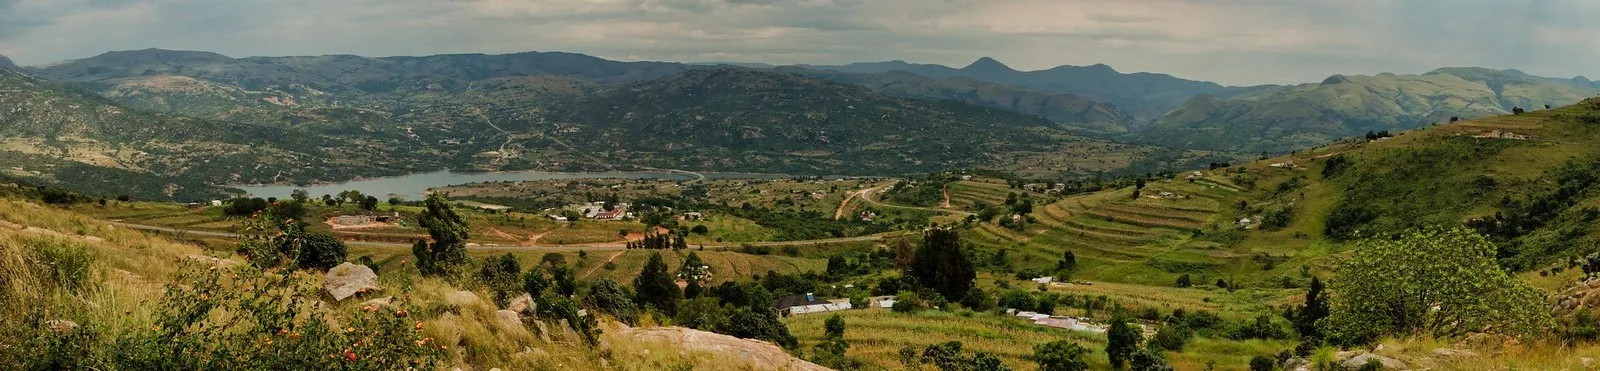 Eswatini (Swaziland) Banner Image